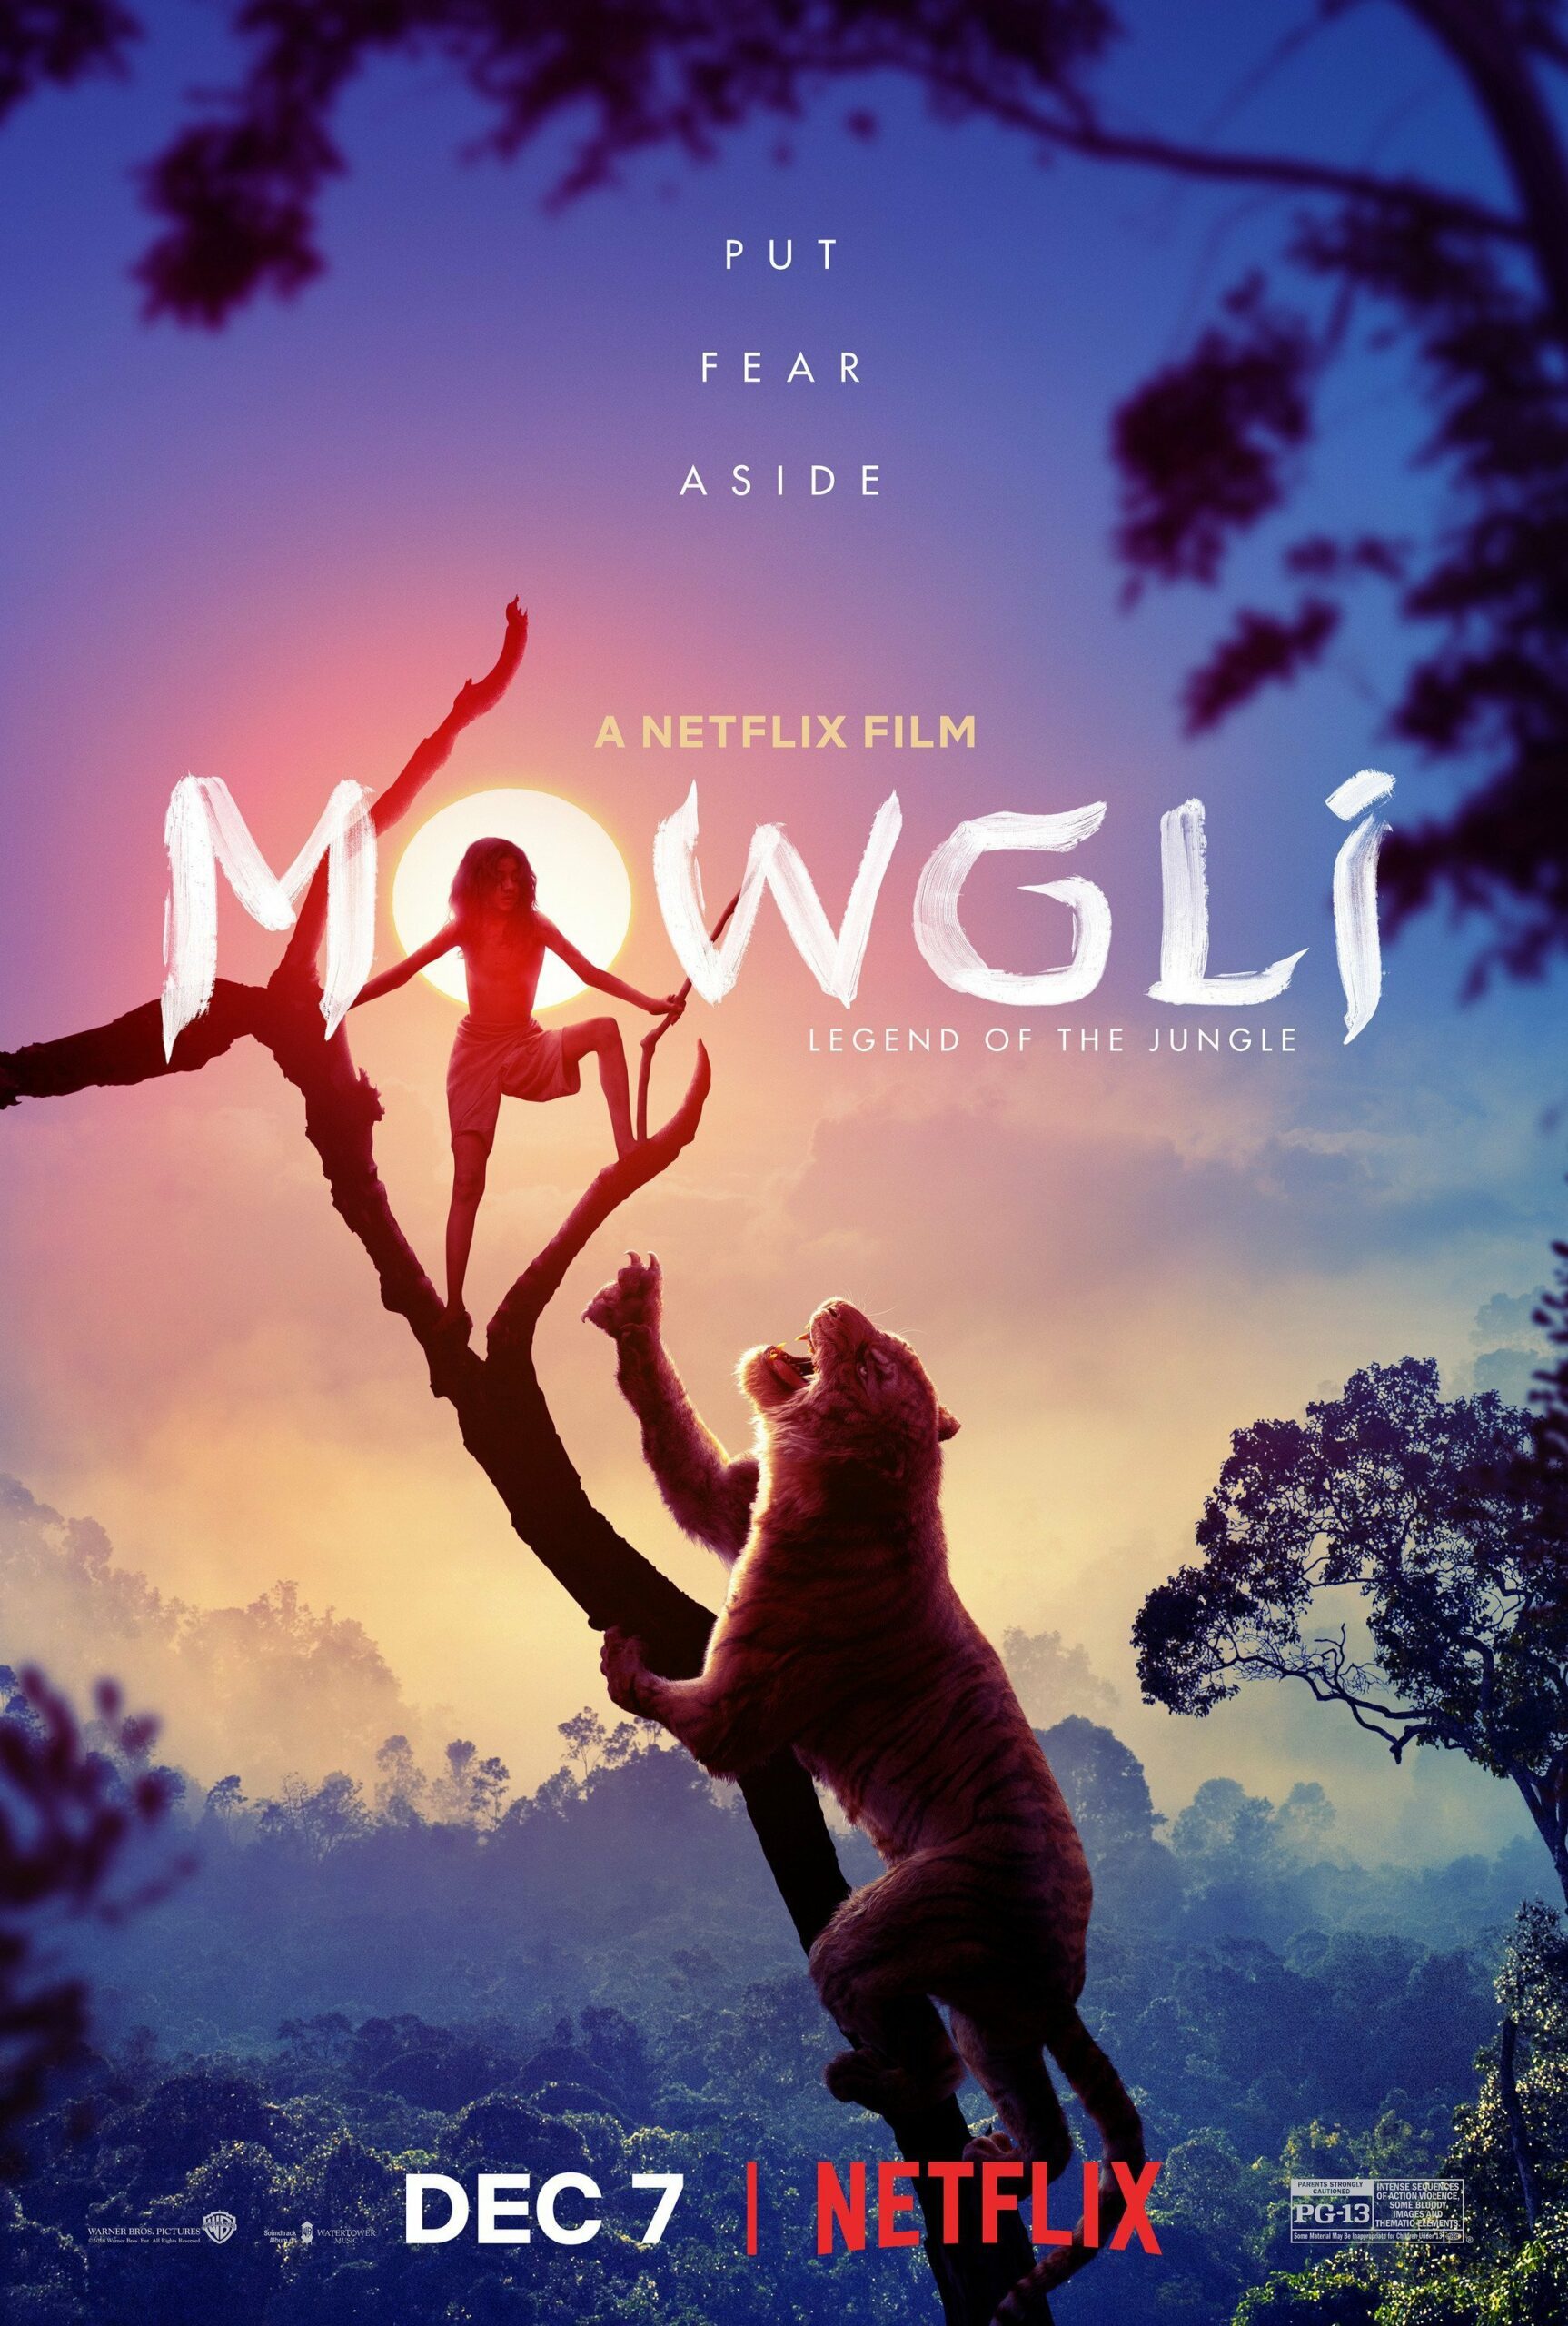 Poster du film Mowgli: la légende de la jungle avec Shere Khan